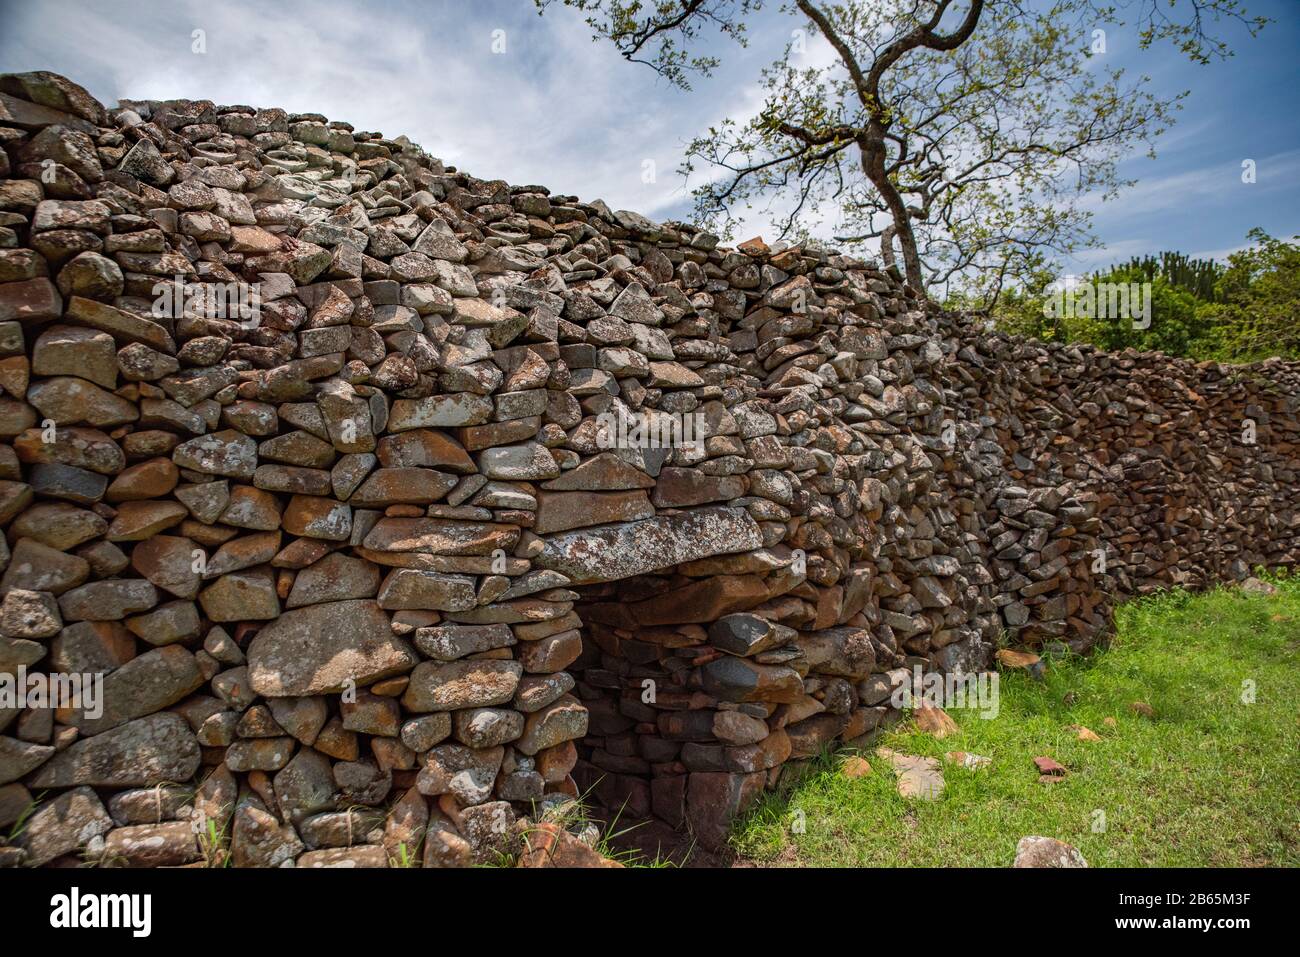 Thimlich Ohinga, stone-built ruins of historic 15th century Iron Age village enclosure, Kenya. Irregular shaped stones. No mortar. Stock Photo